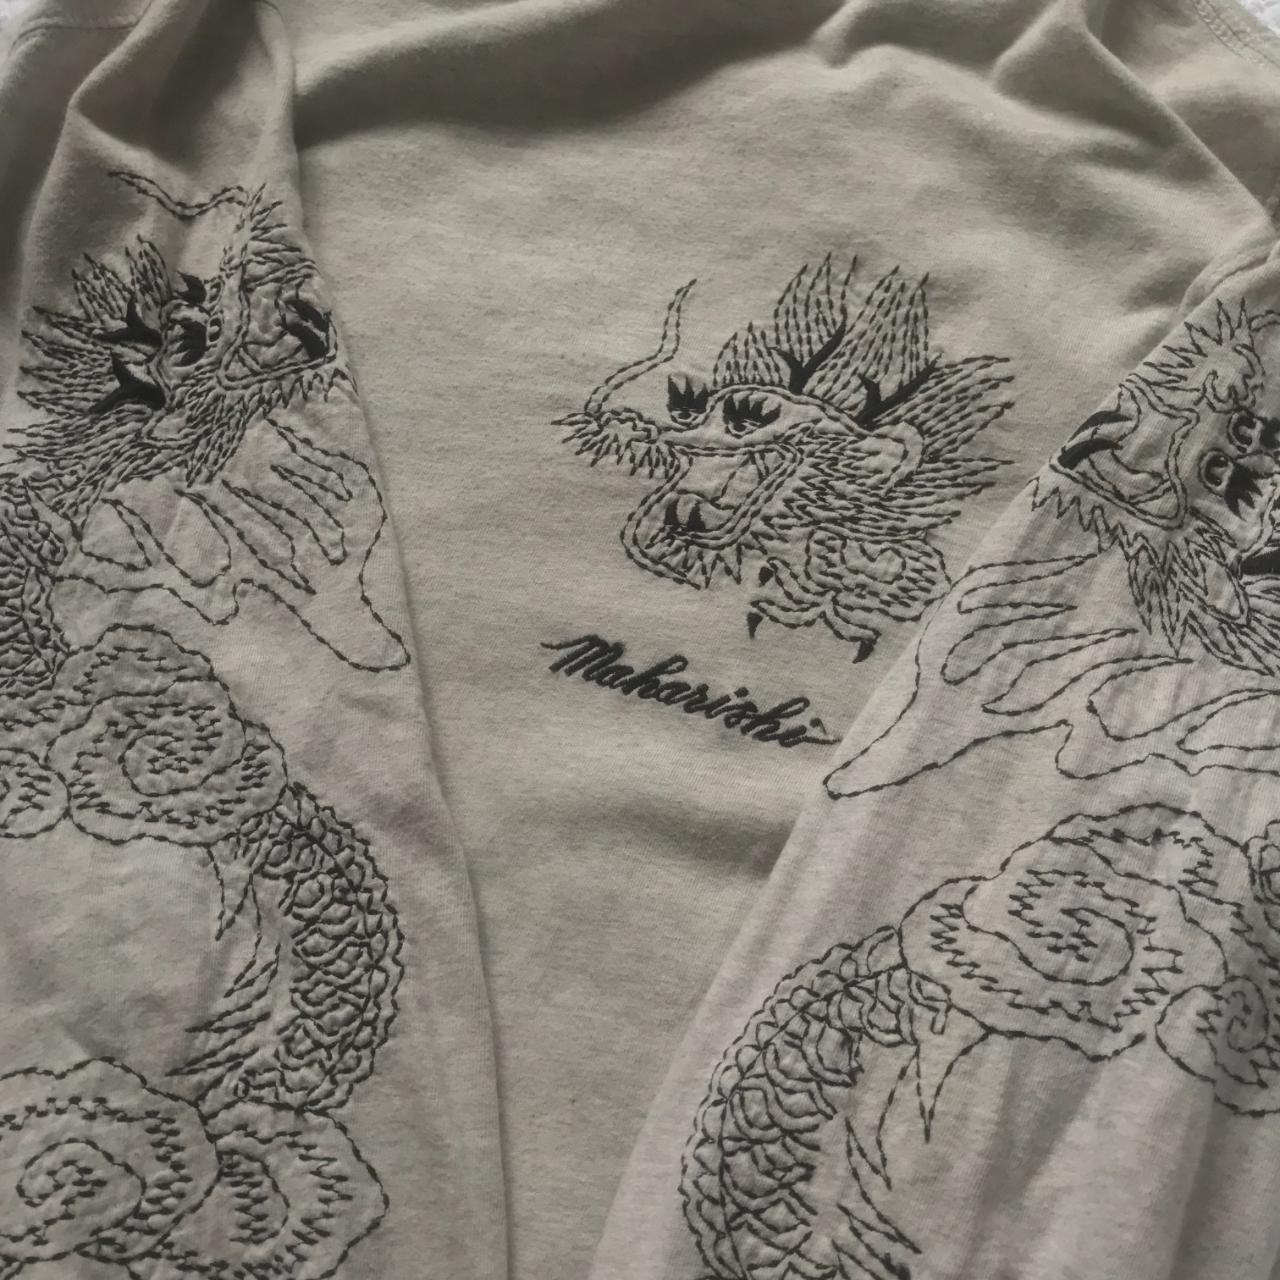 Product Image 3 - Maharishi Dragon Embroidered Tee

• Sizing